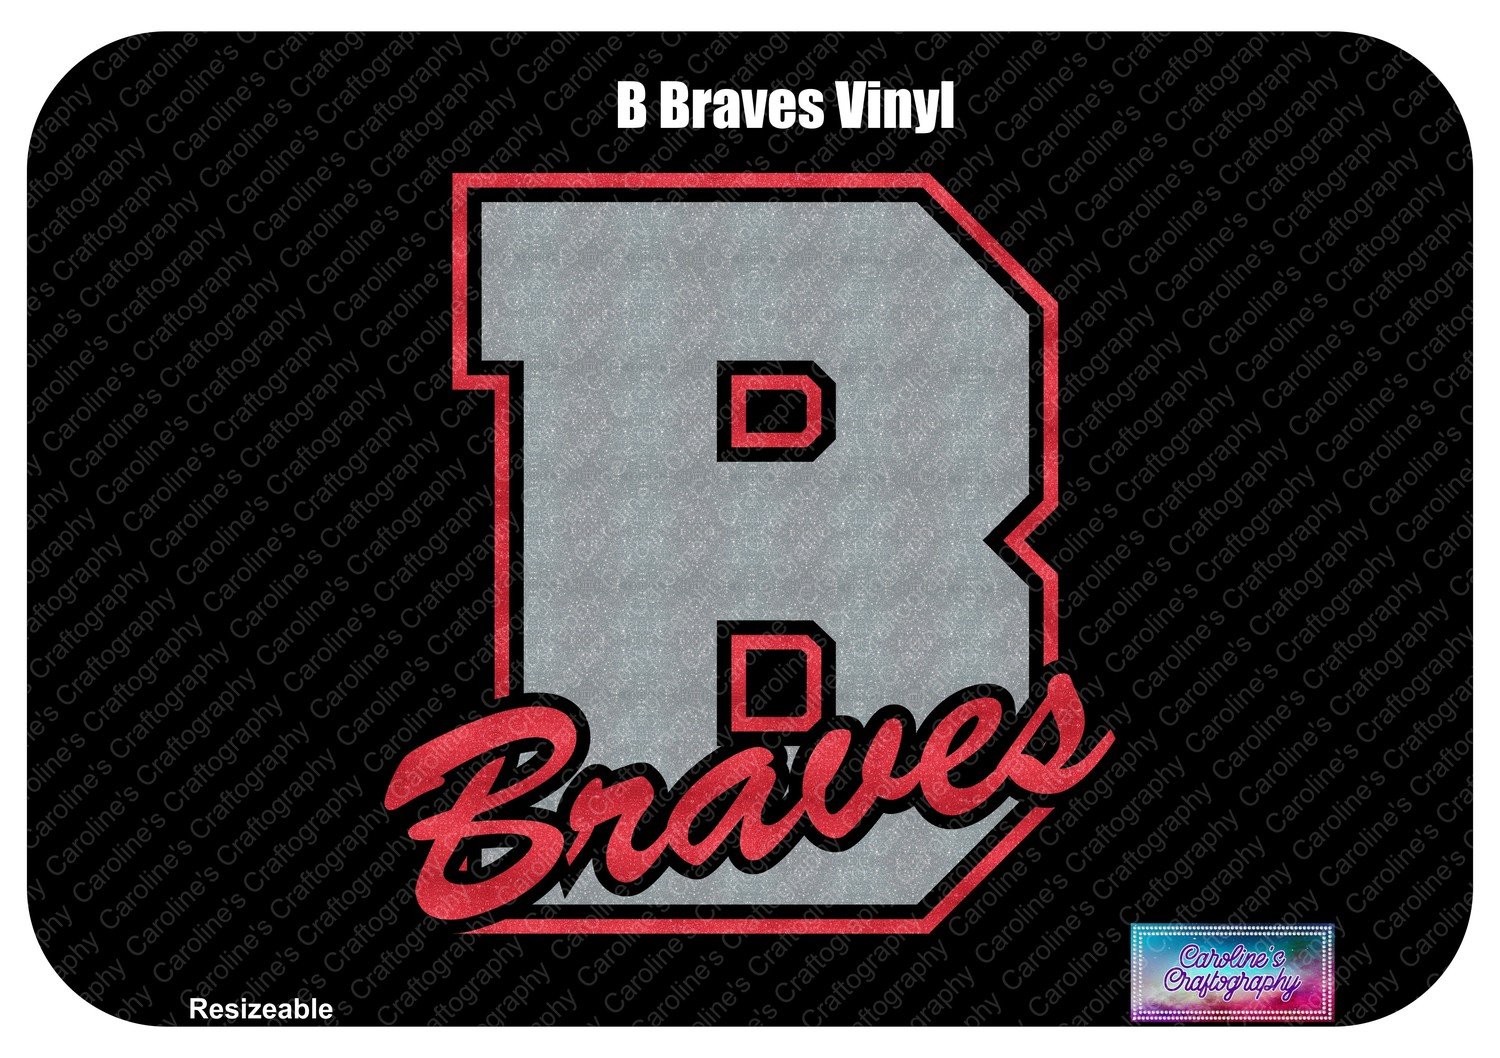 B Braves Vinyl